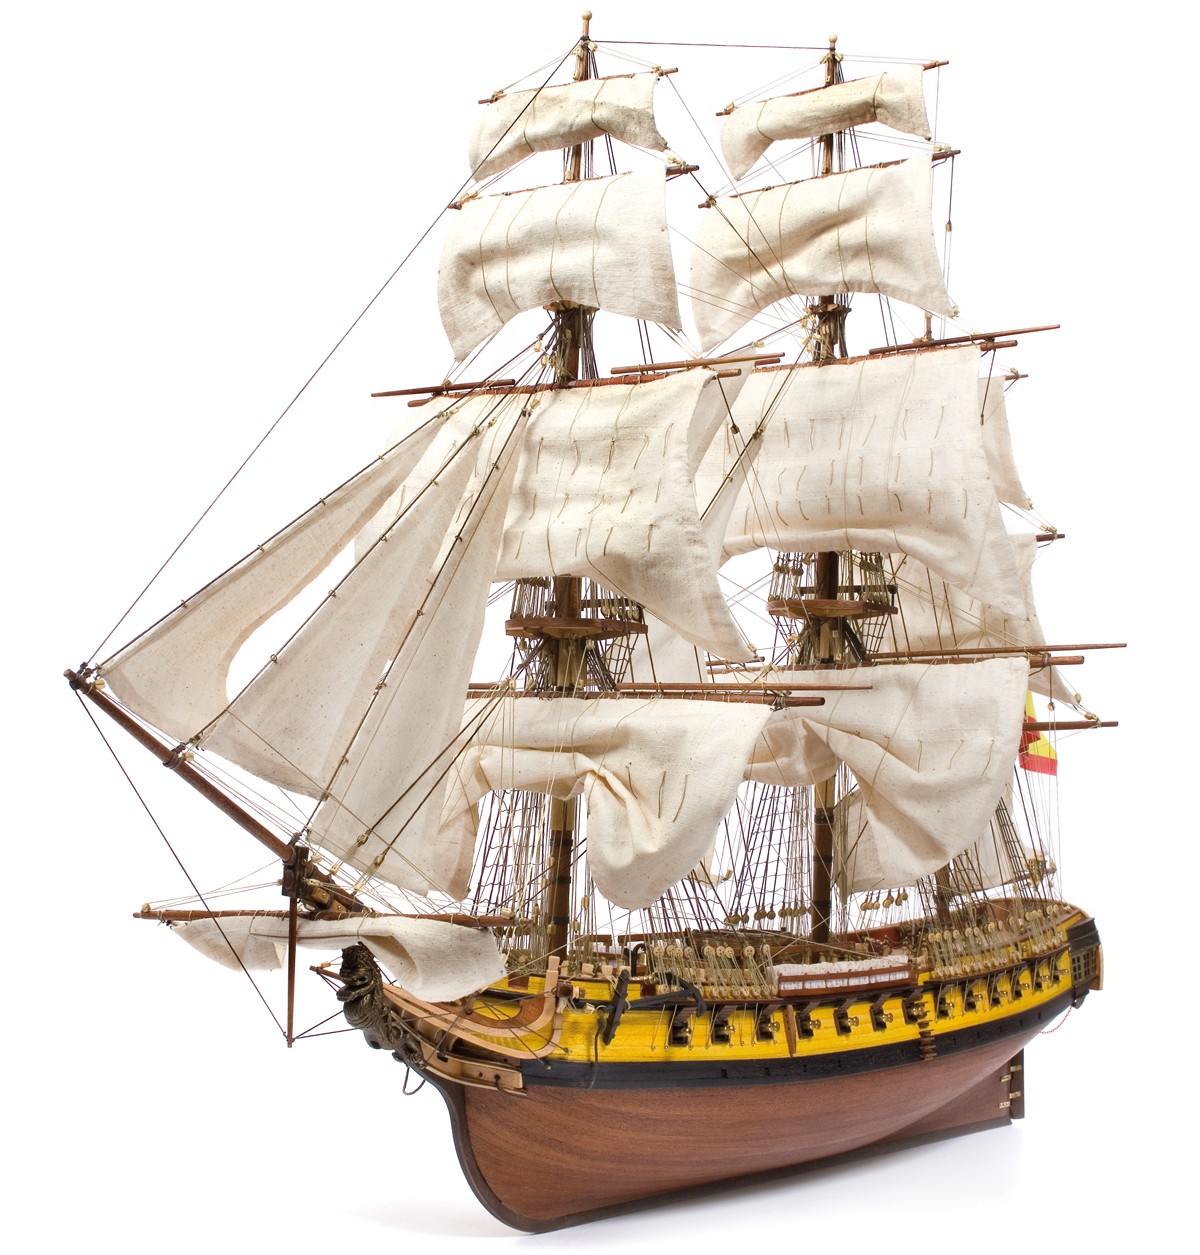 N. Senora de las Mercedes Ship Model Kit - Occre (14007)